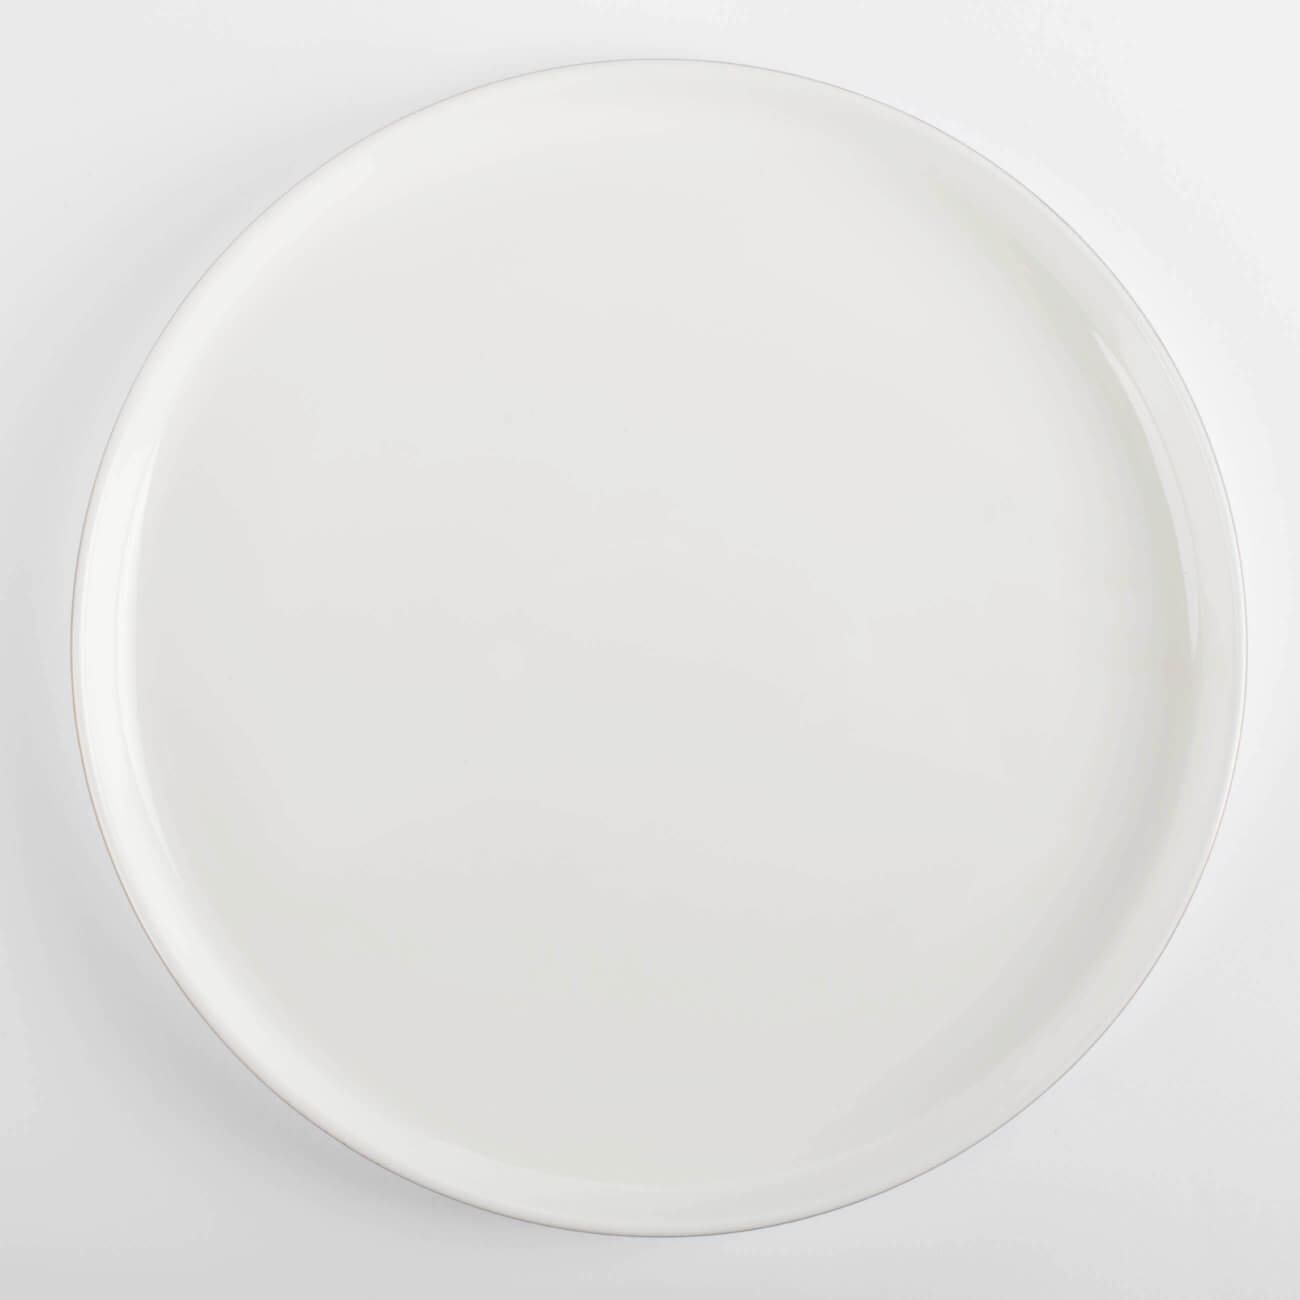 Dining plate, 26 cm, porcelain F, white, Ideal gold изображение № 1